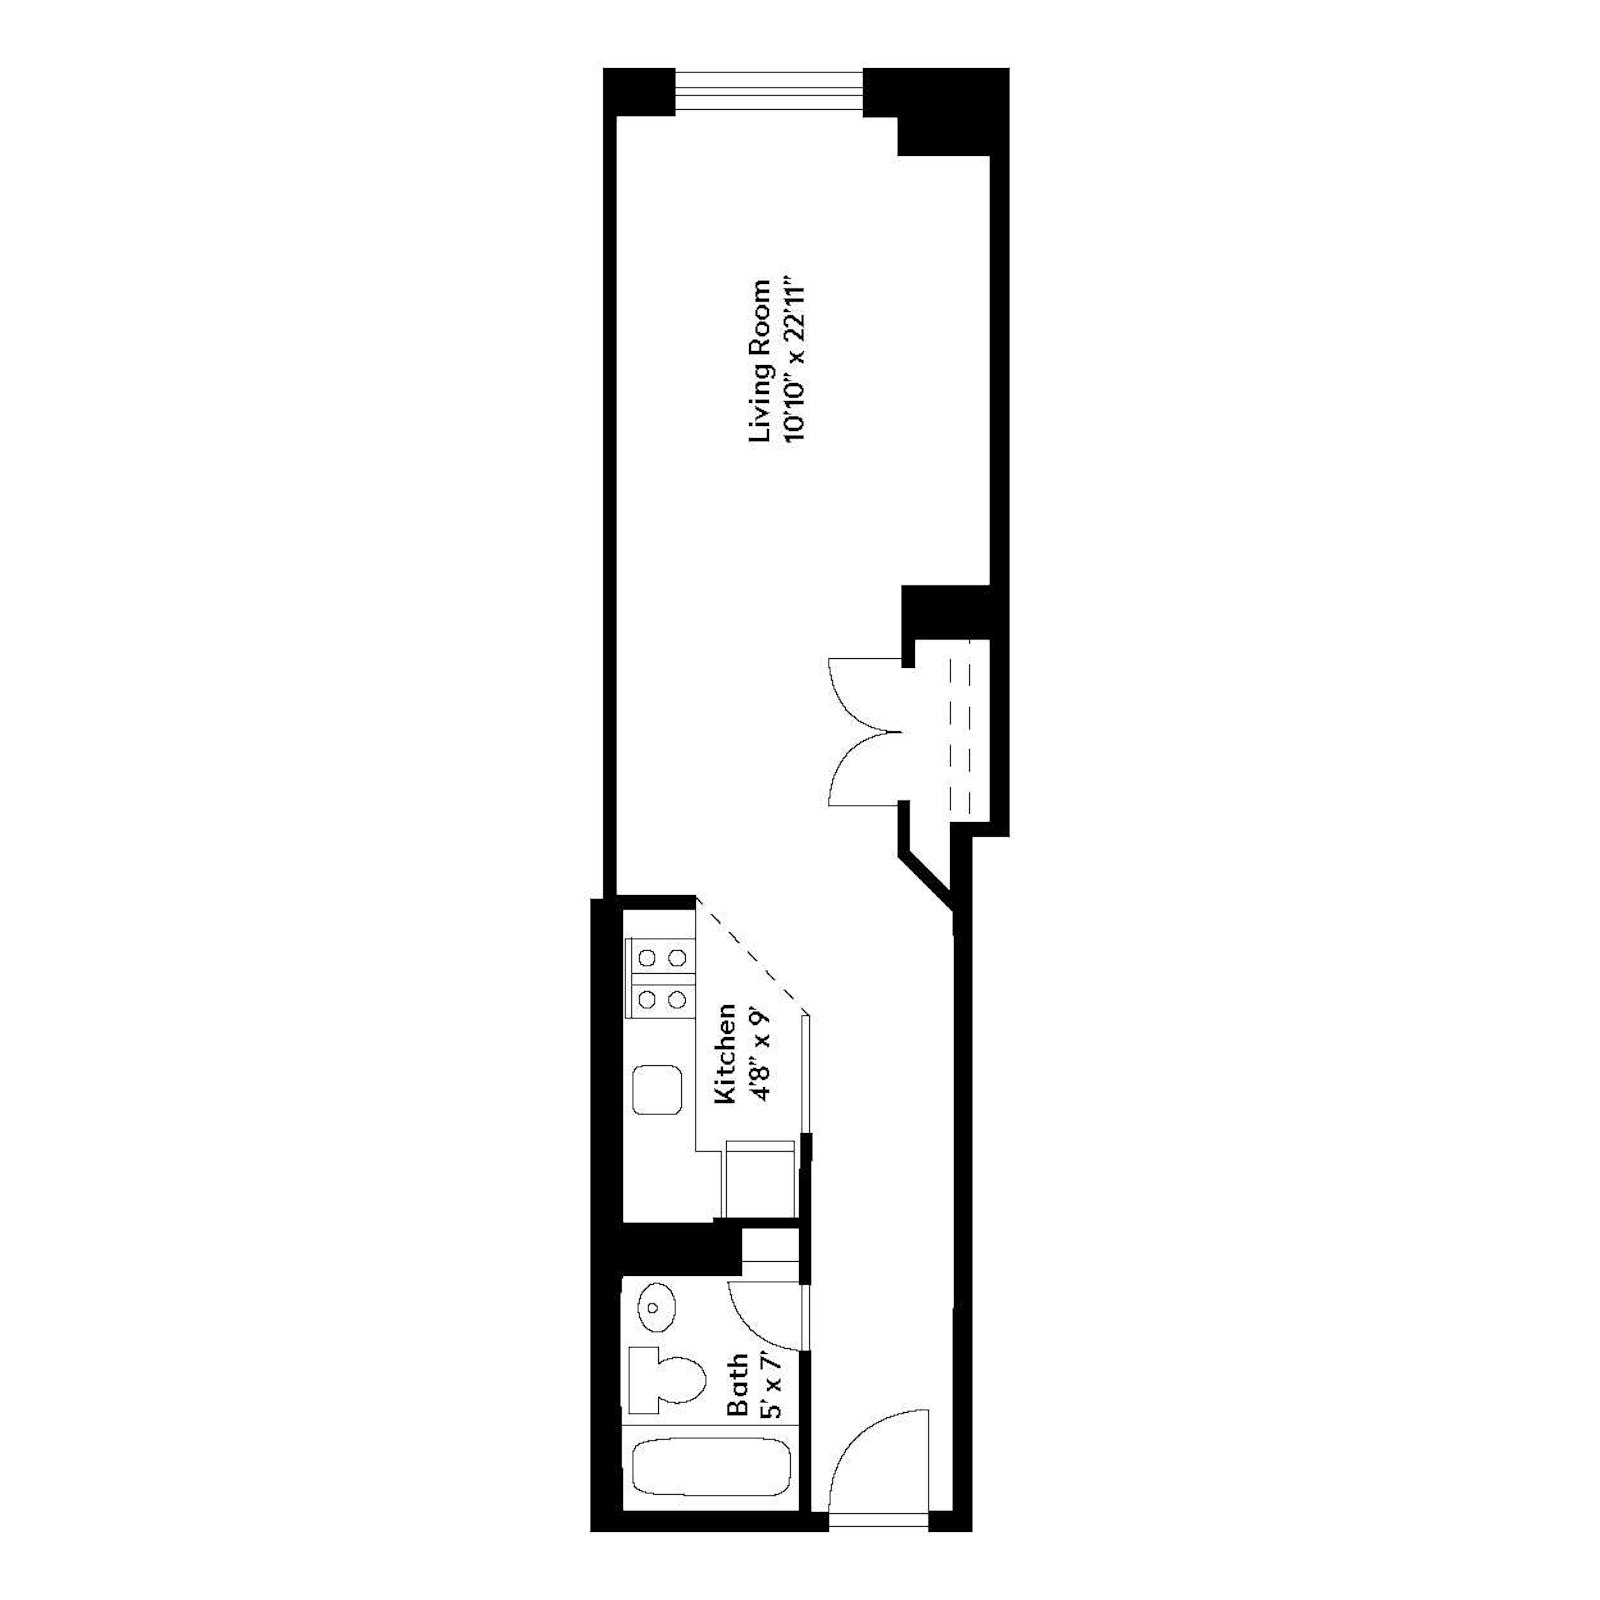 Floorplan for 222 West 14th Street, 6M